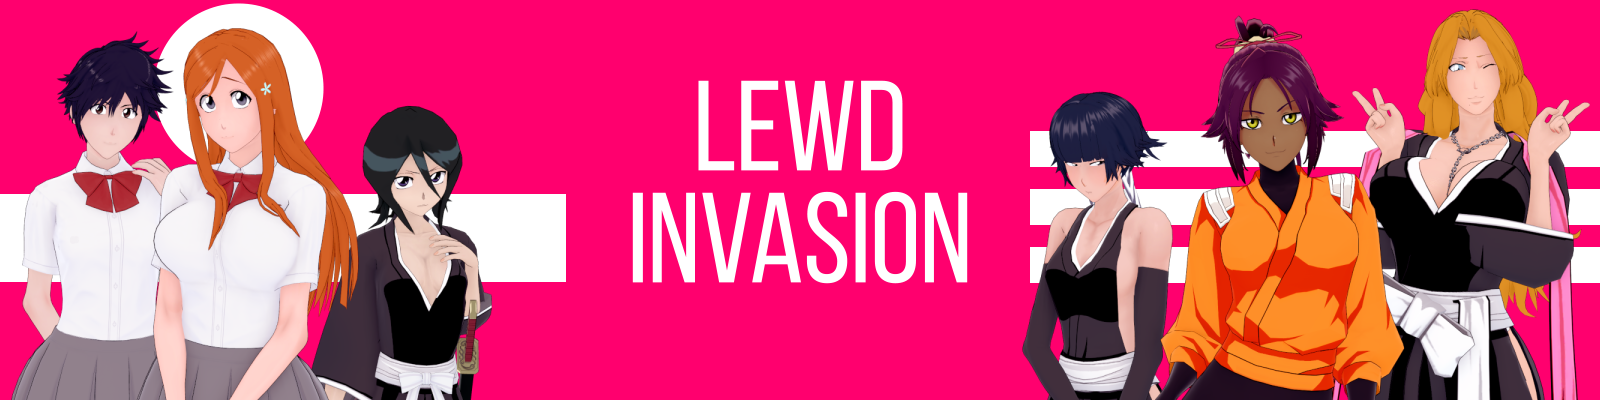 Lewd Invasion poster